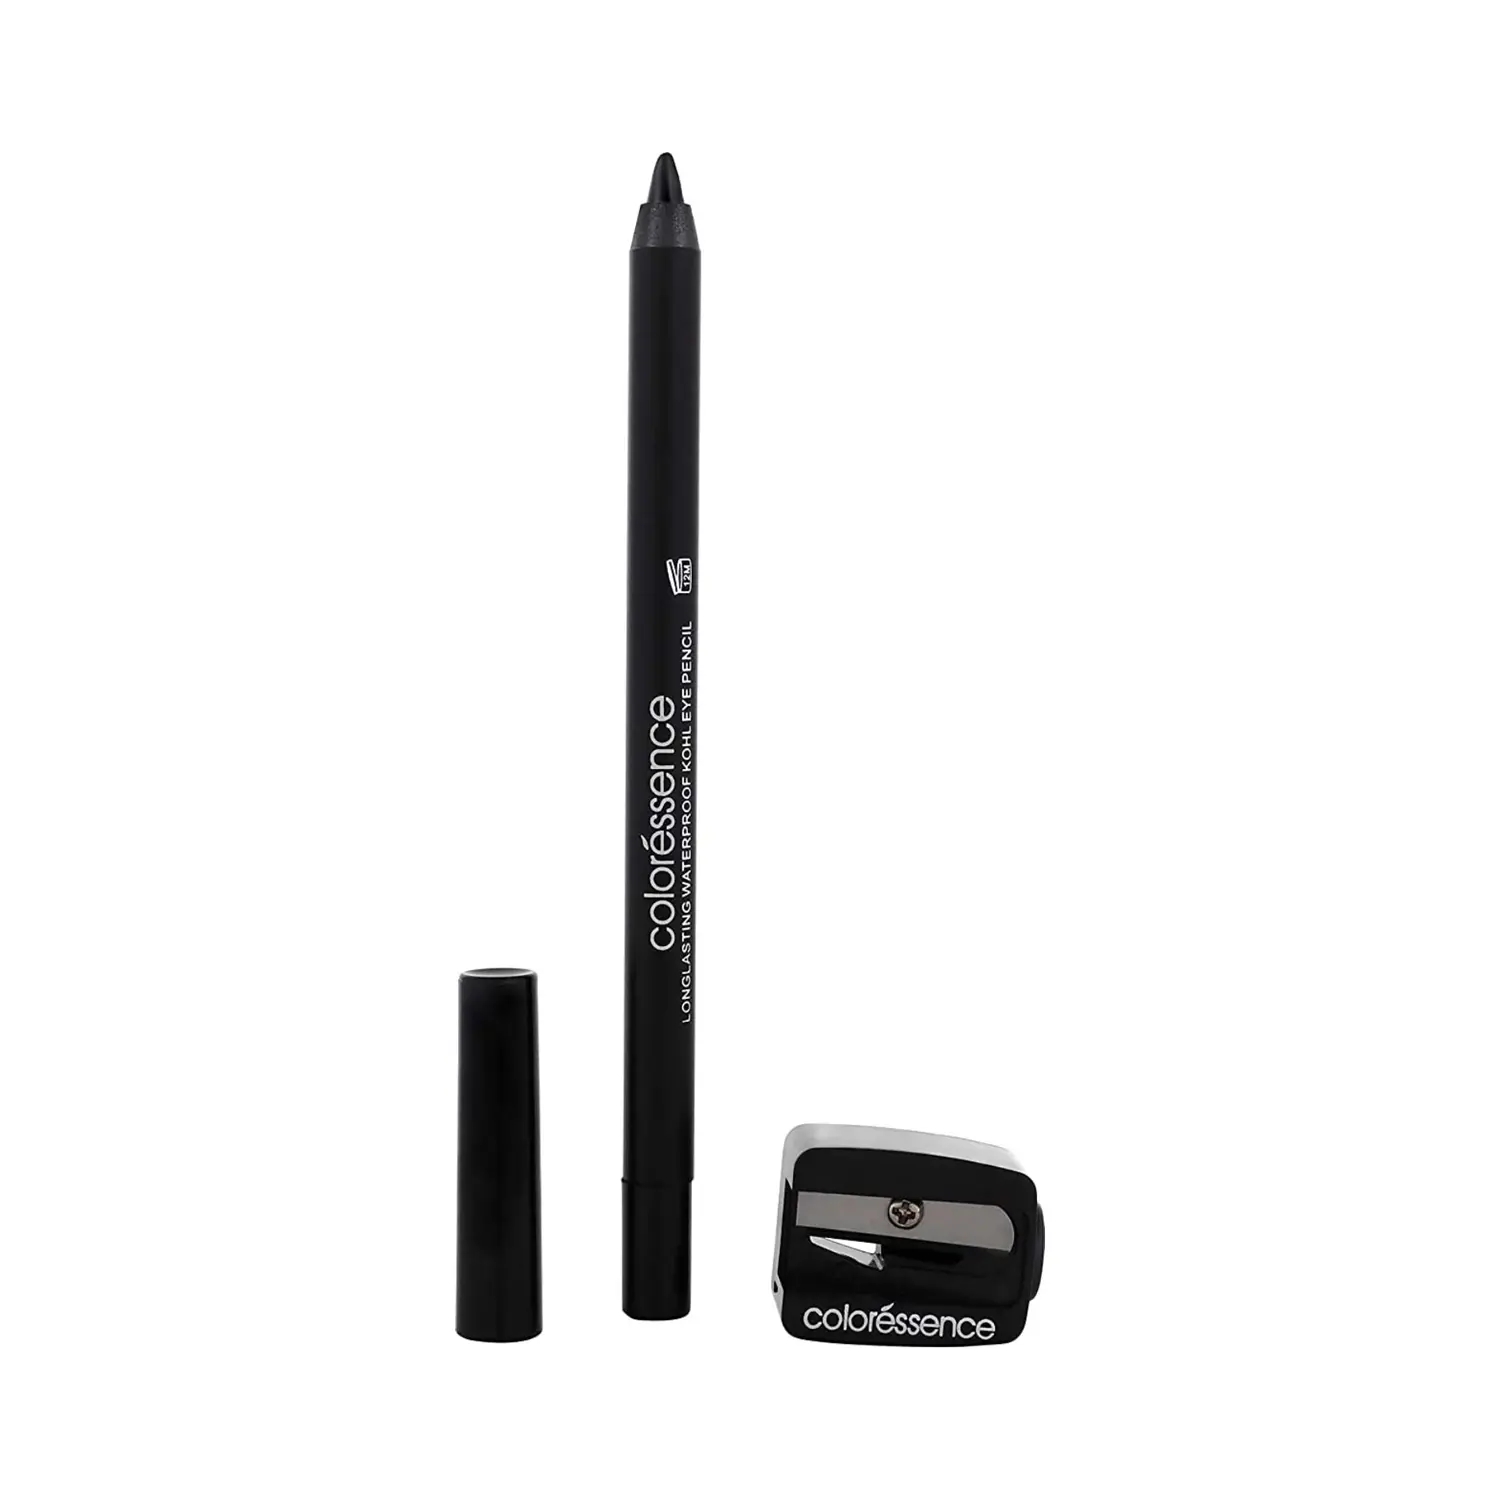 Coloressence | Coloressence HD Charcoal Kohl Pencil Eye Definer Kajal With Free Sharpener - Black (1.2g)